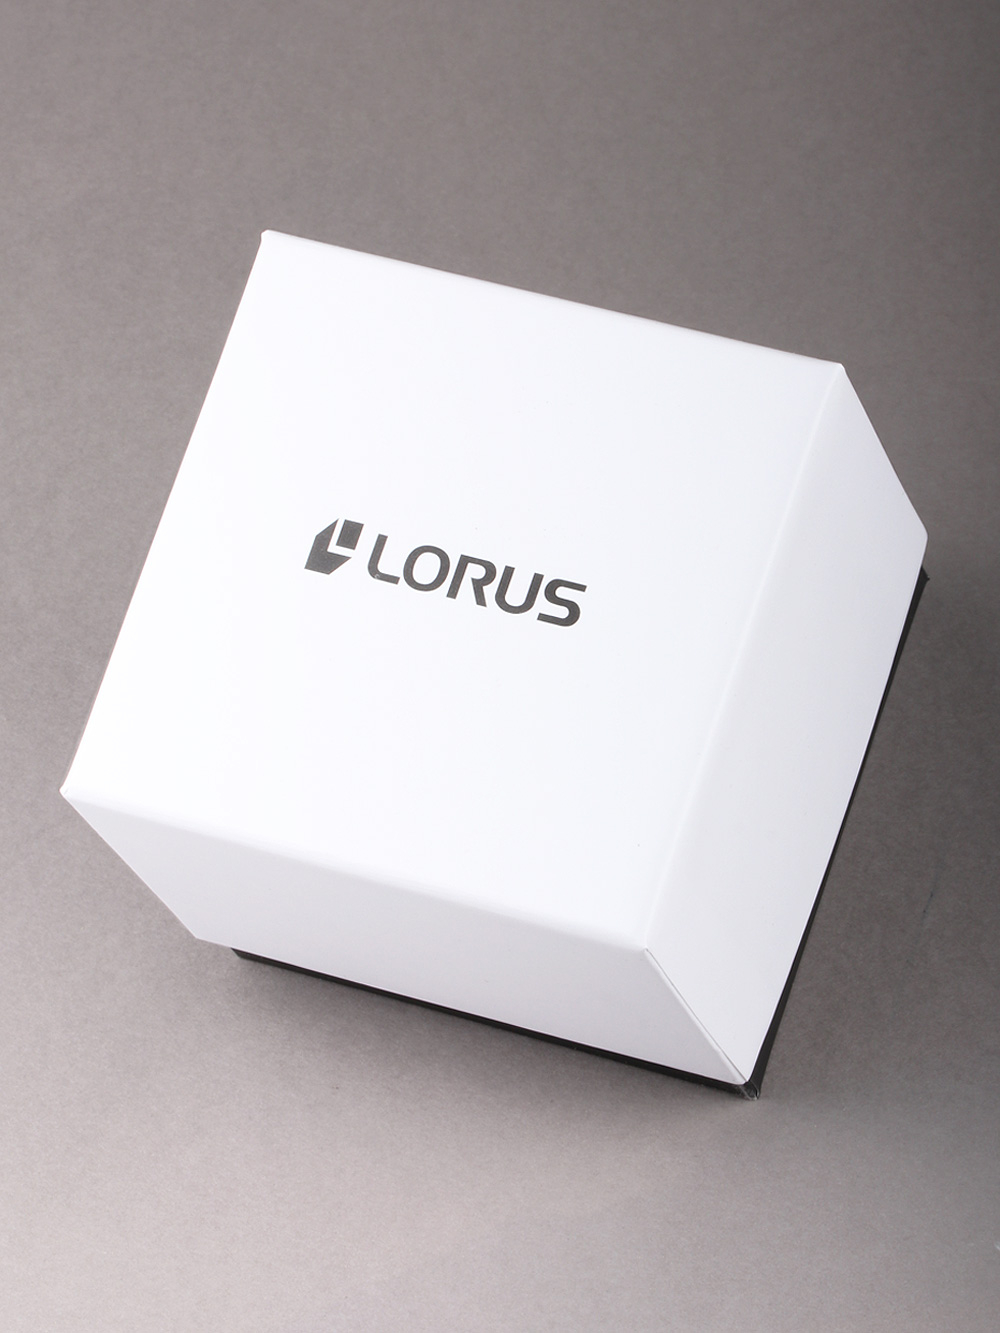 Lorus RH910PX9